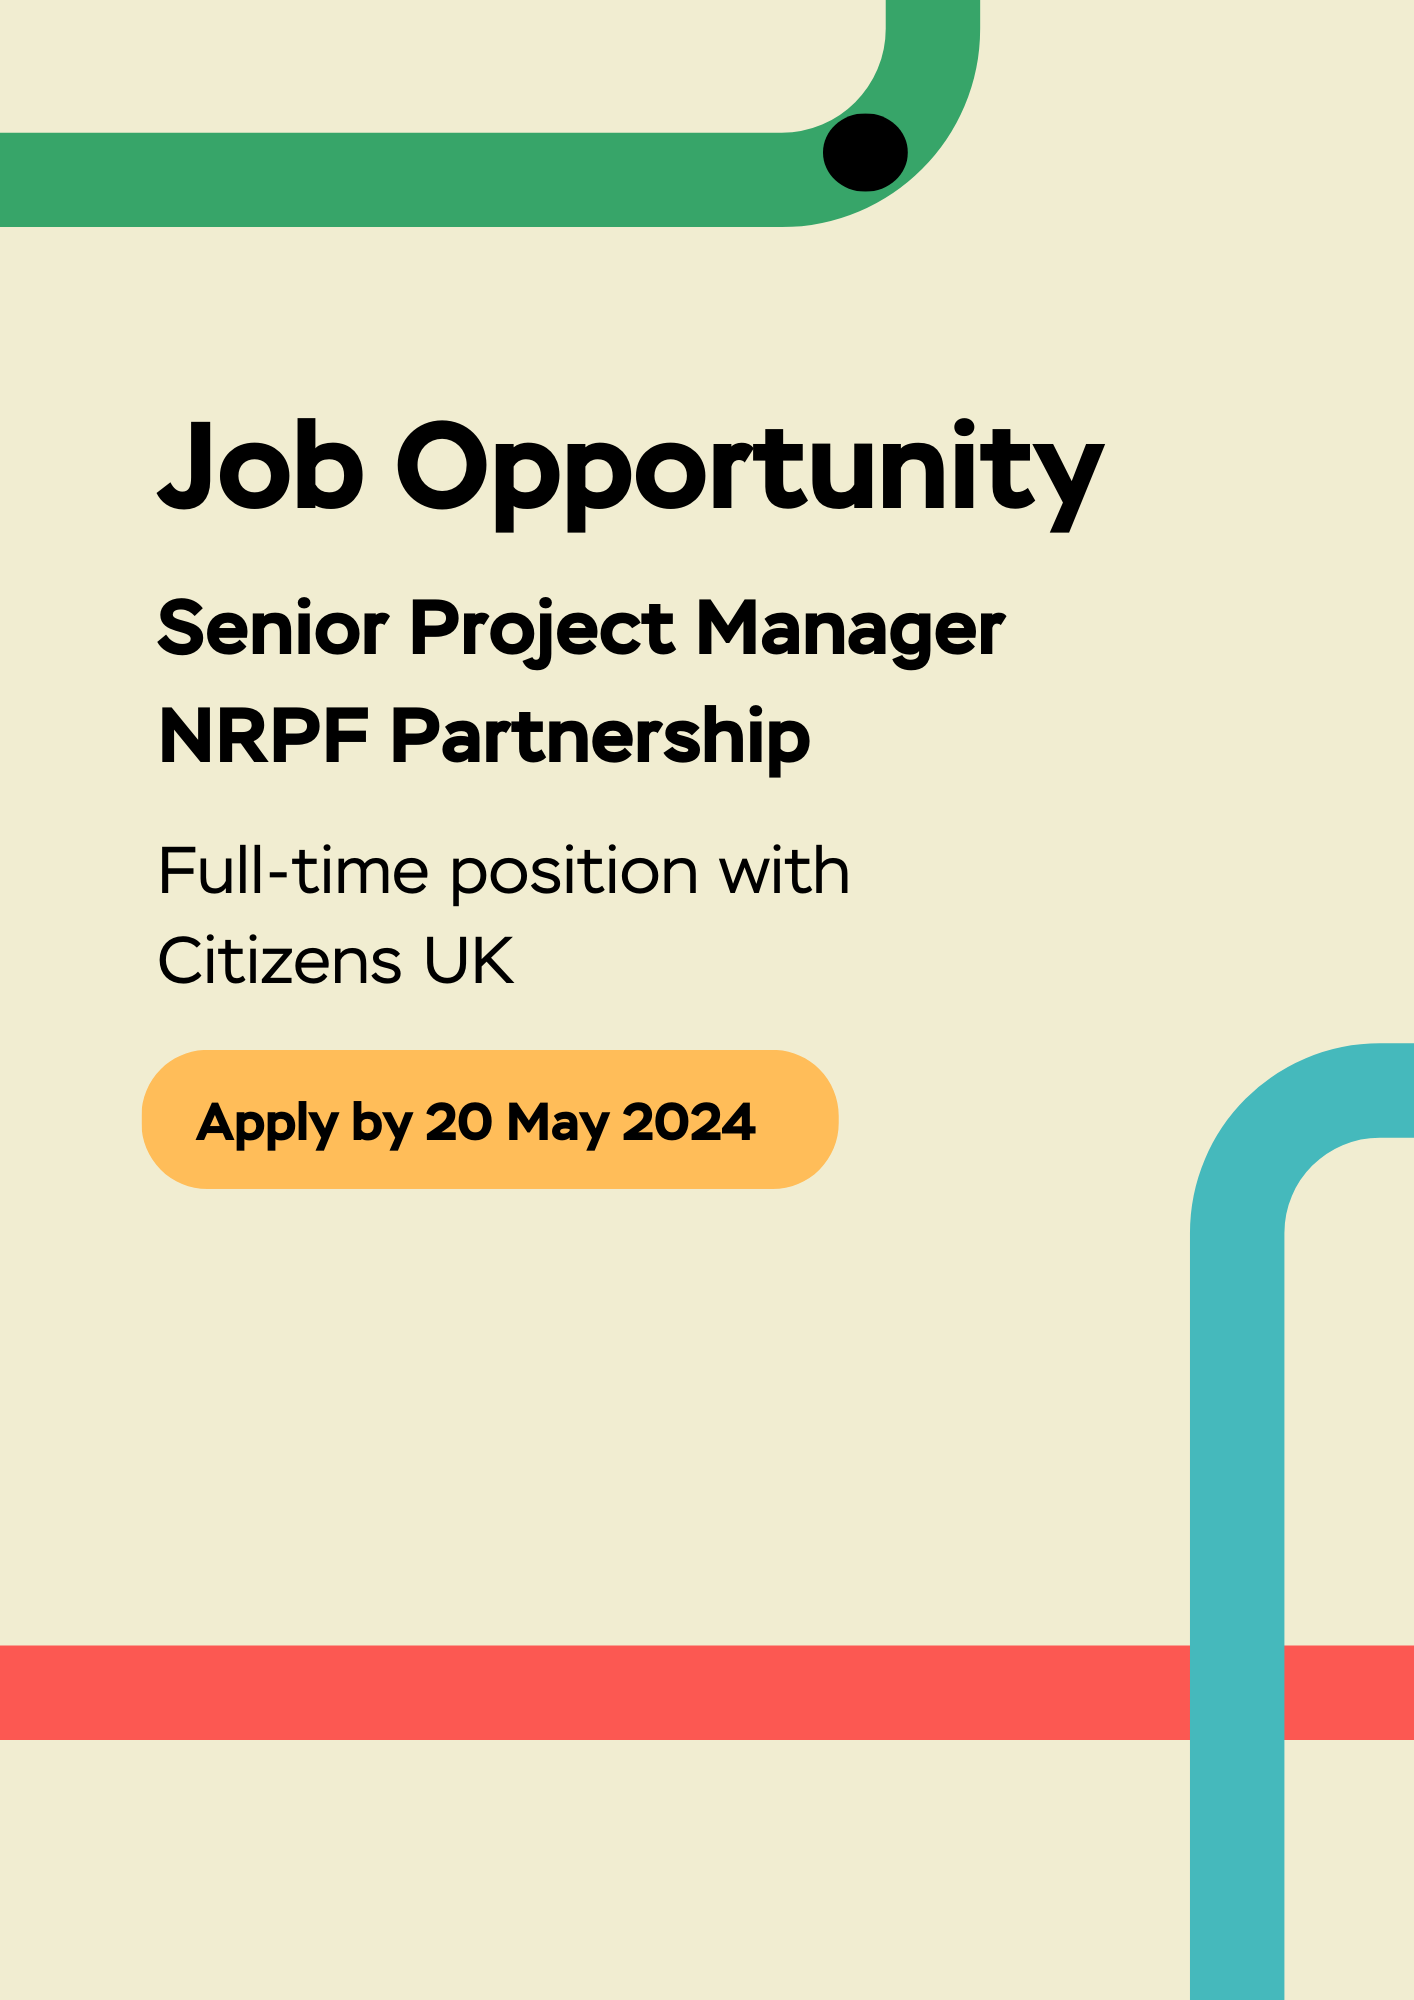 Job opportunity: Senior Project Manager for NRPF Partnership (at Citizens UK)